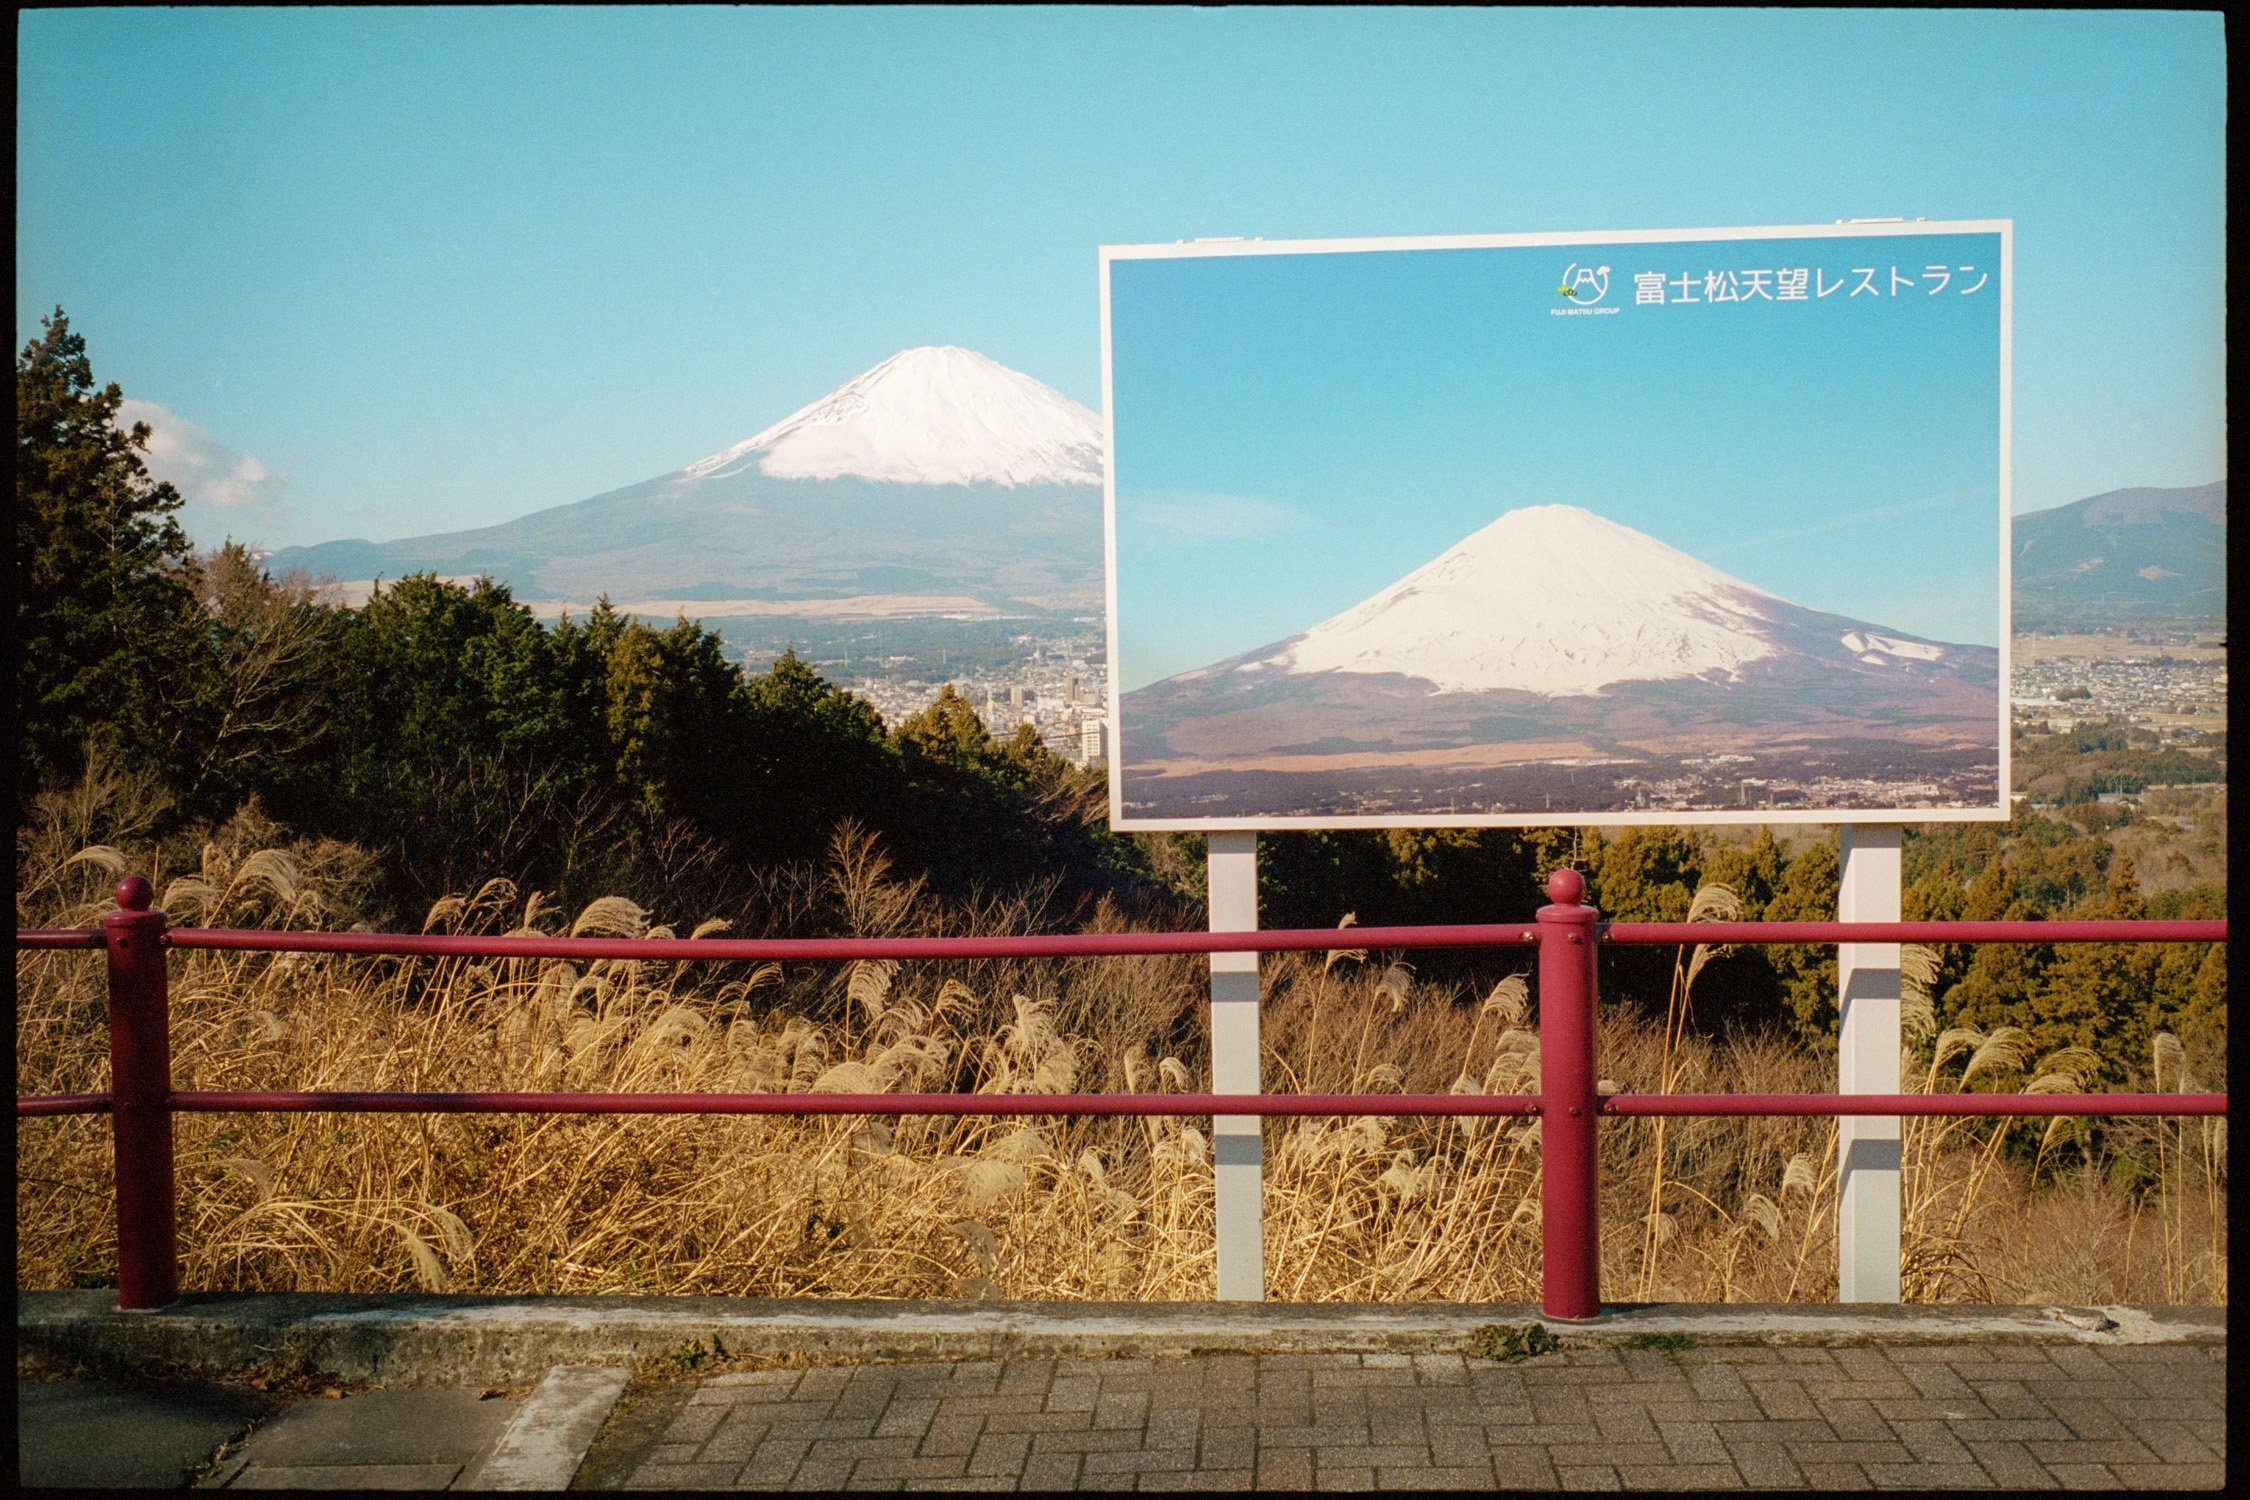 "Mt. Fuji, Gotemba, Shizuoka, Jan 2019" by Shin Noguchi